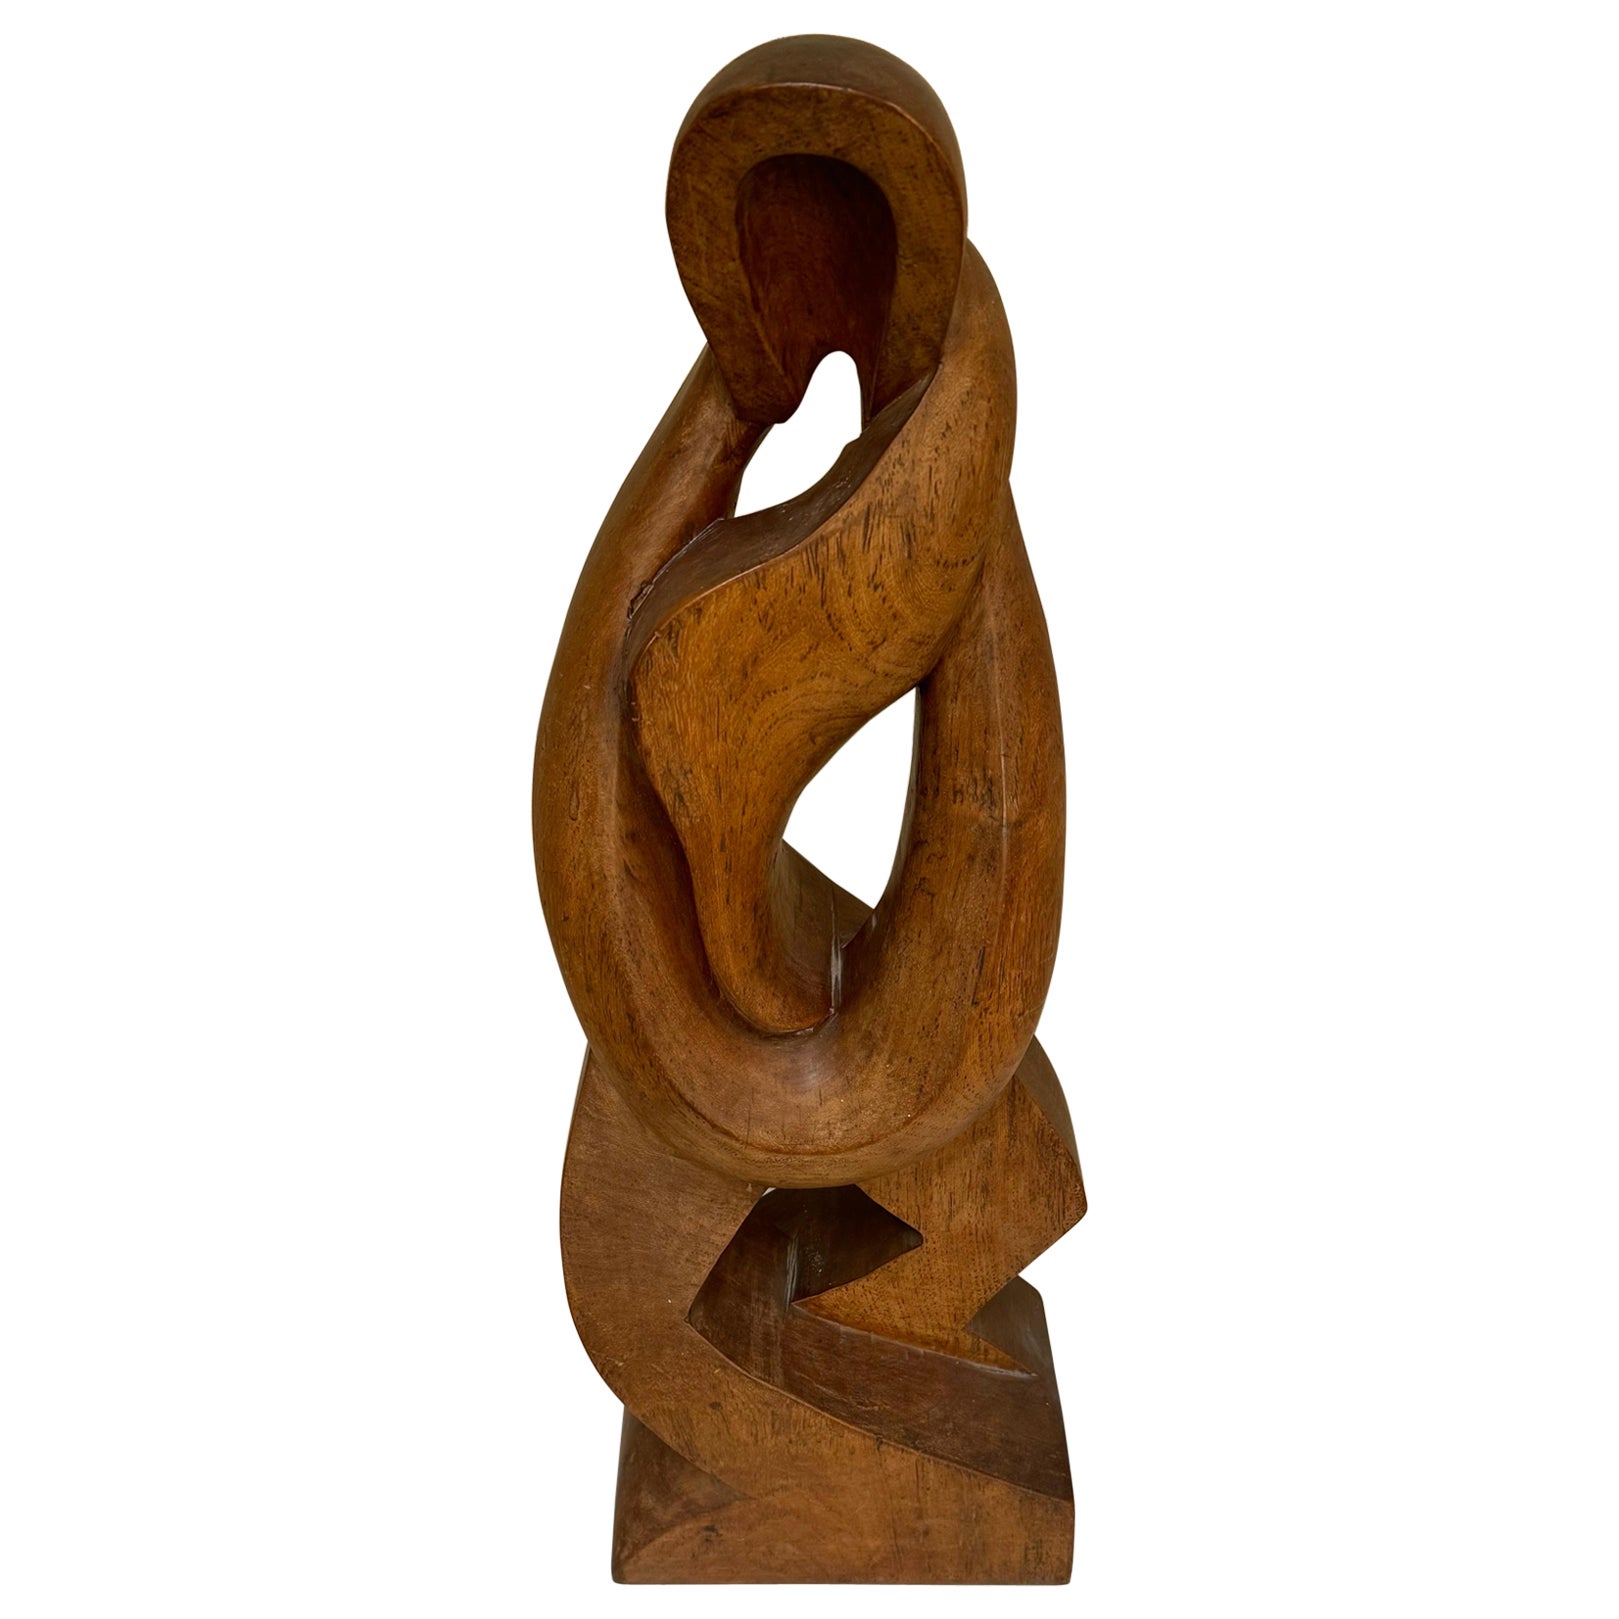 1950s Modernist Abstract Wooden Figurative Sculpture